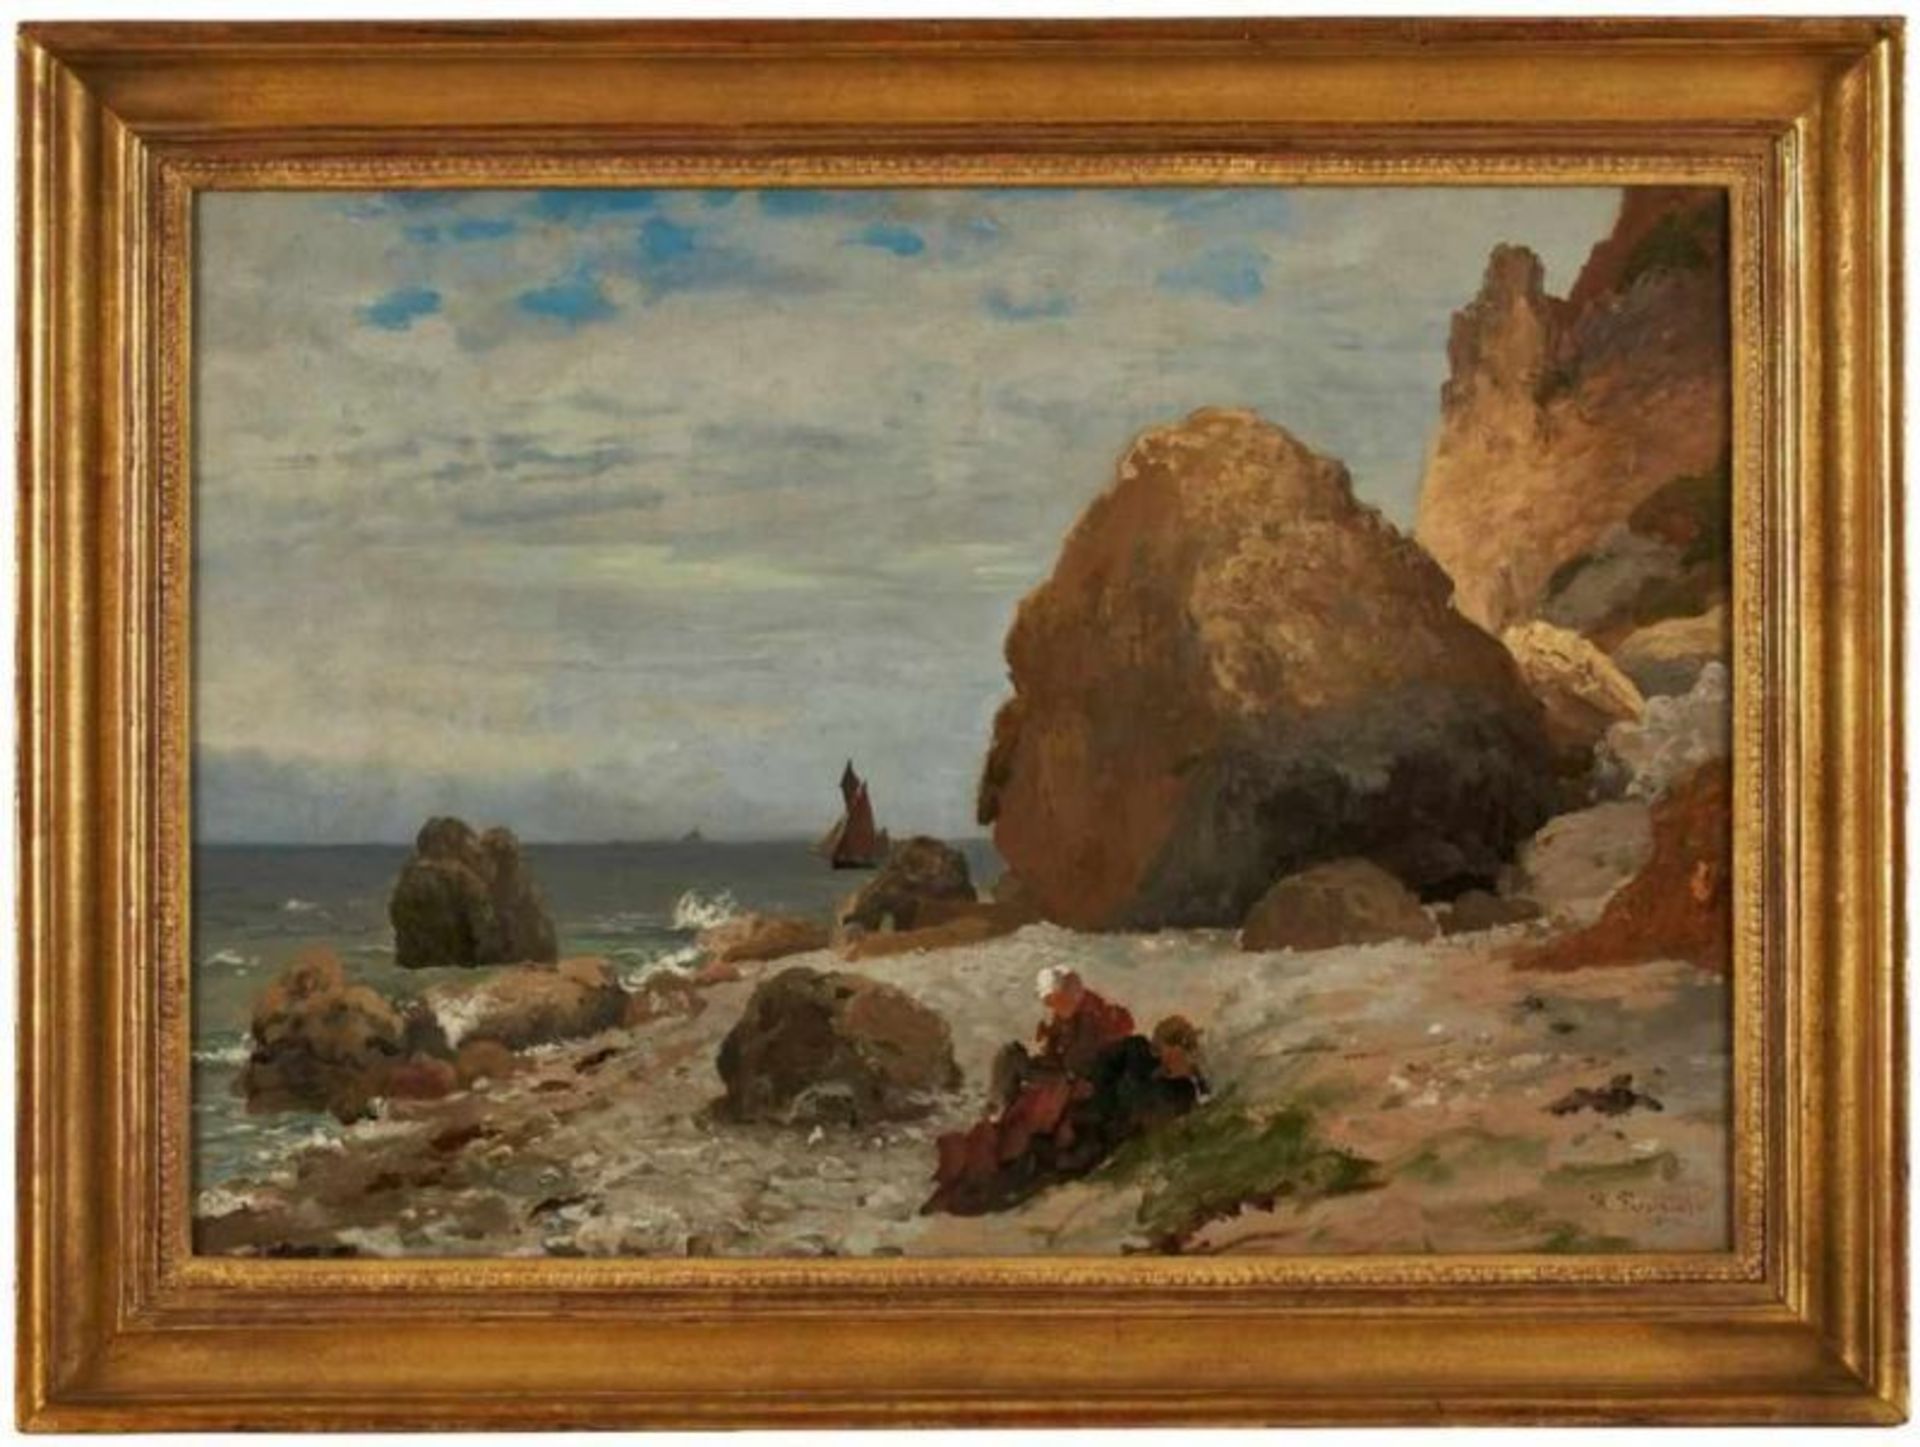 Gemälde Richard Fresenius 1844 Frankfurt - 1903 Monte Carlo Landschaftsmaler. Studium der Malerei am - Image 3 of 3